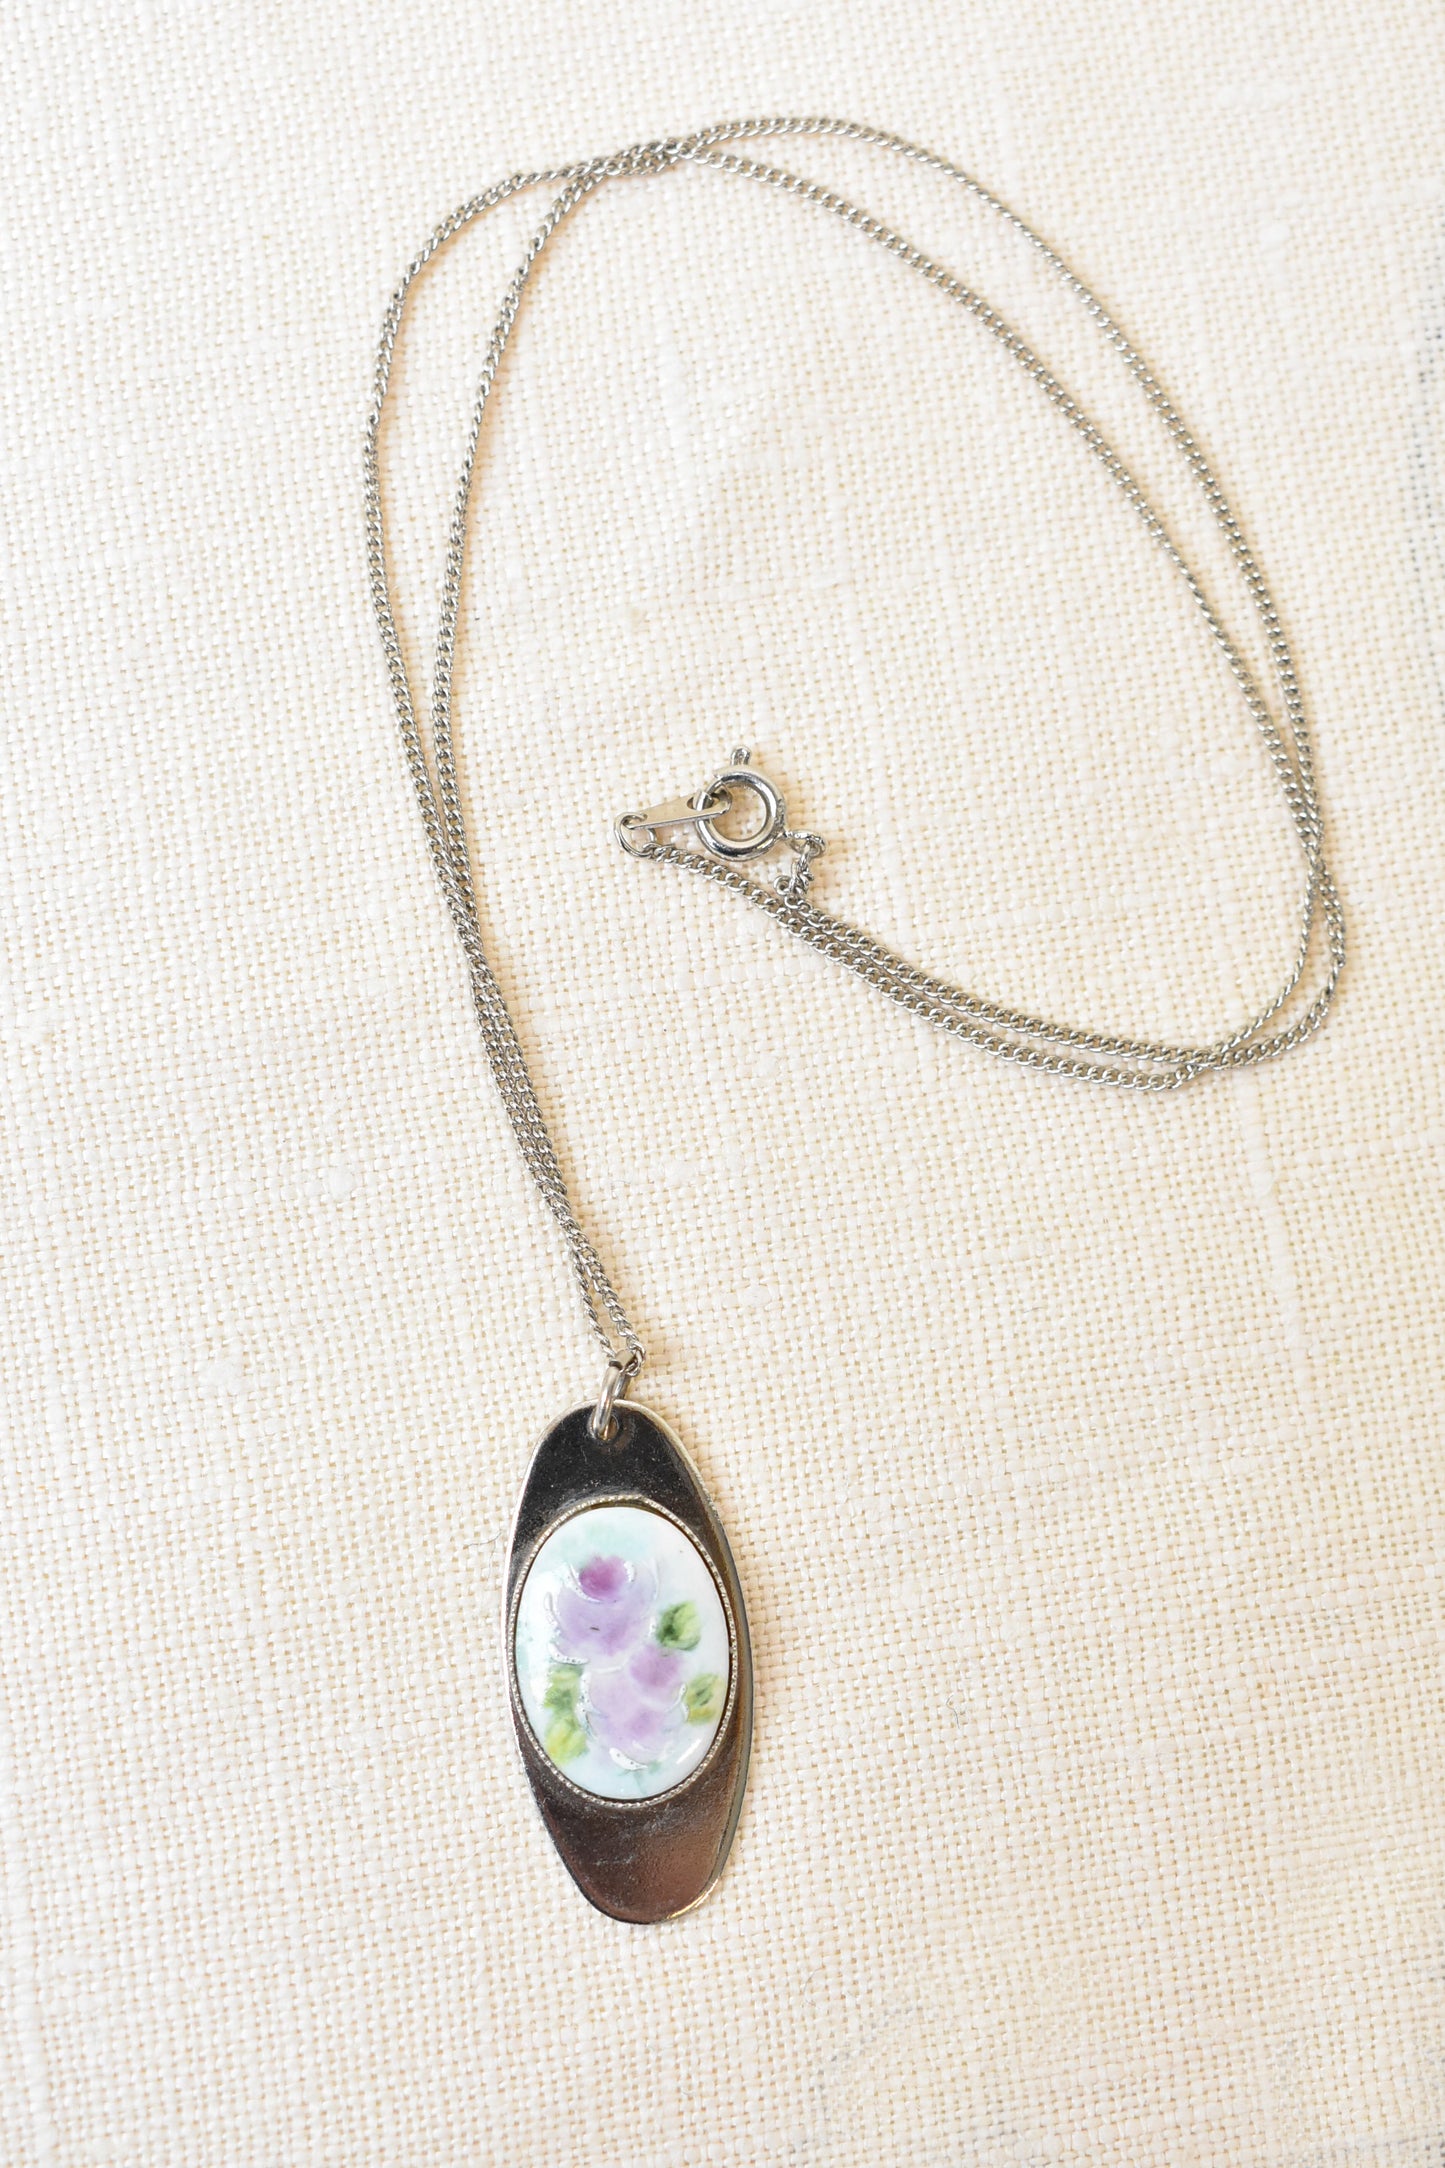 Handpainted flower cameo pendant necklace